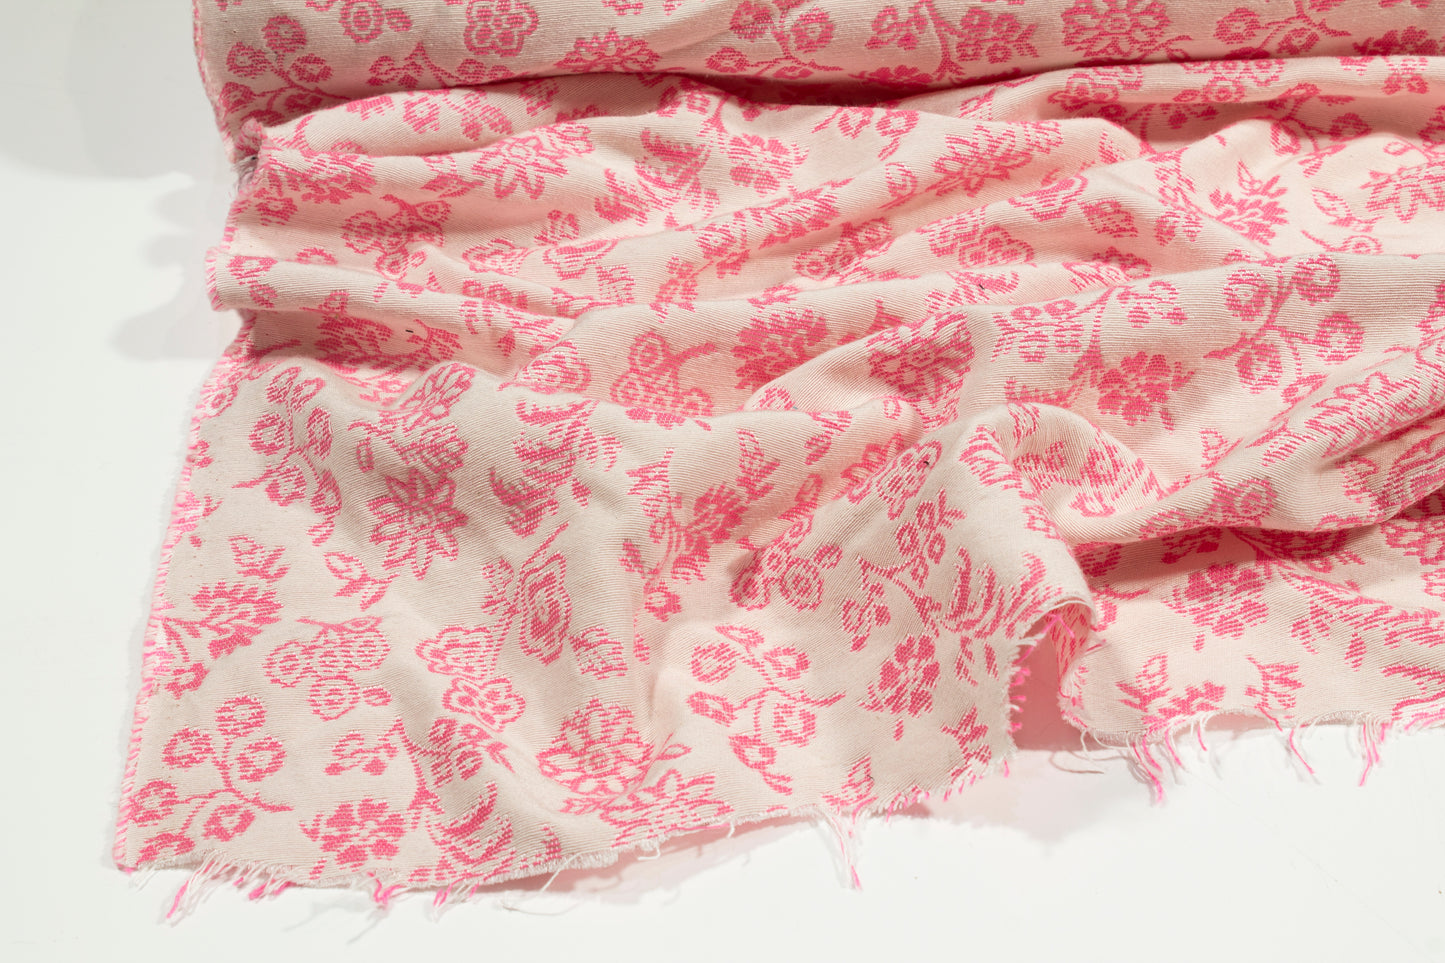 Floral Italian Cotton Brocade - Baby Pink